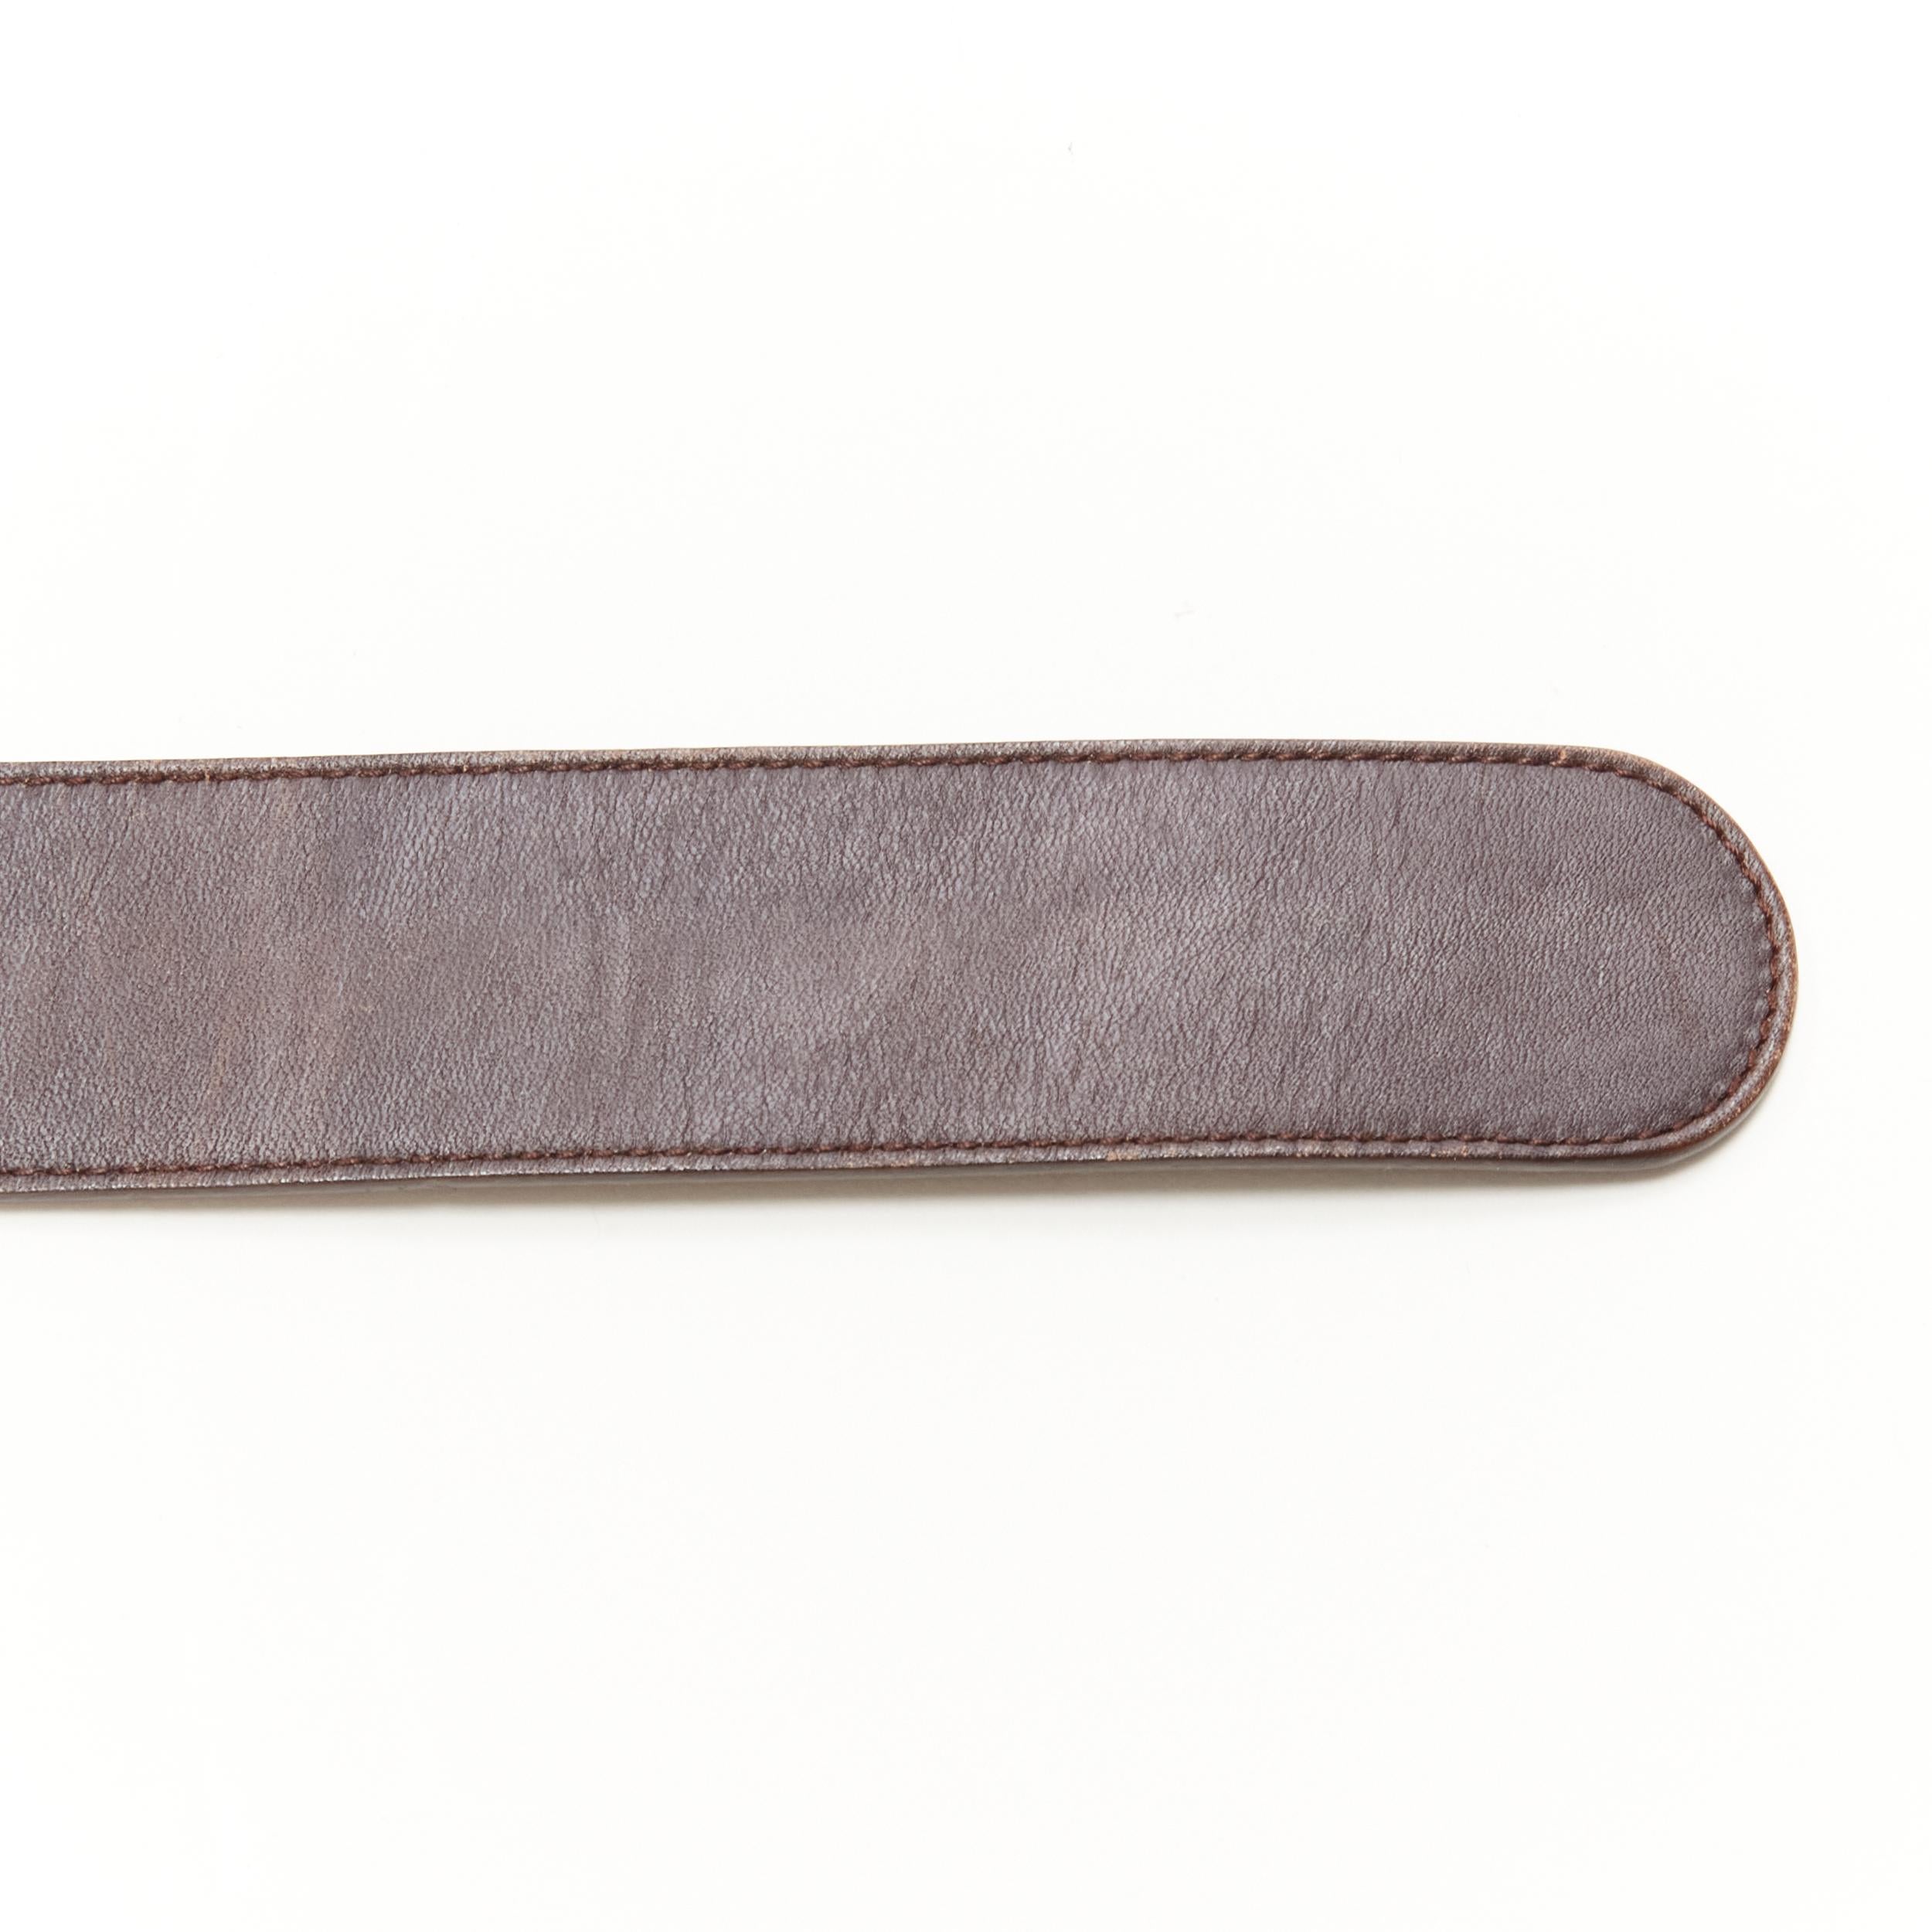 GUCCI Marmont GG buckle Vintage effect brushed brown leather belt 80cm 32